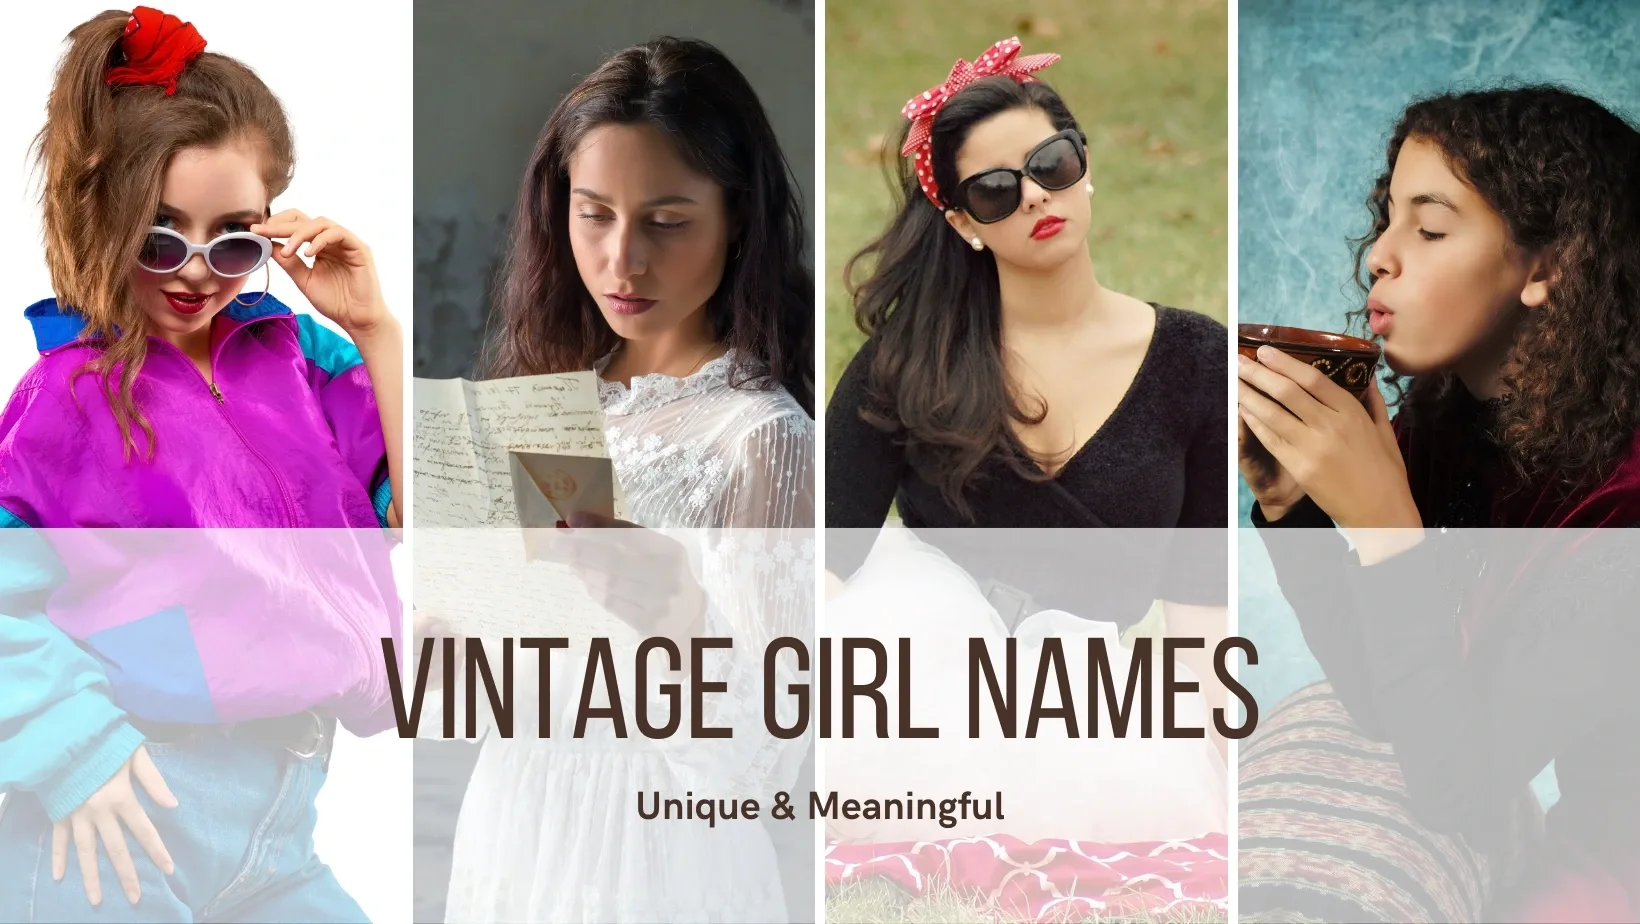 Vintage girl names